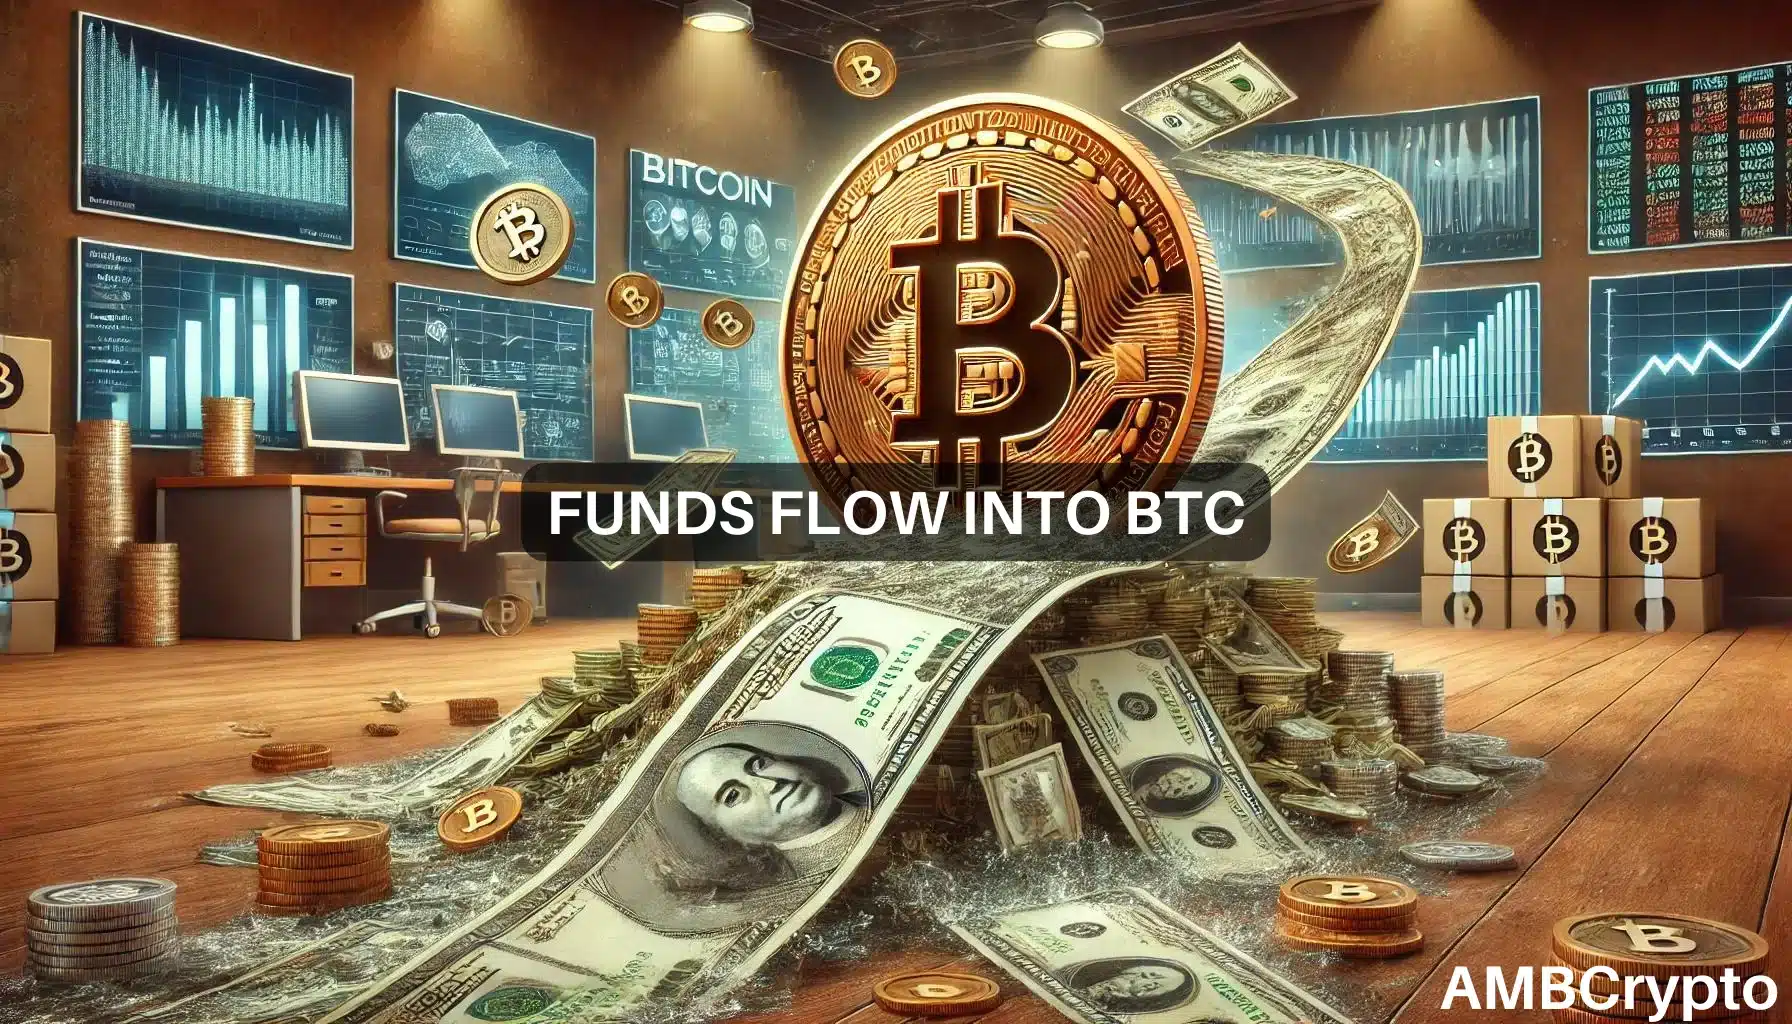 Bitcoin ETF sees $534 million inflows - Bullish sign for BTC?